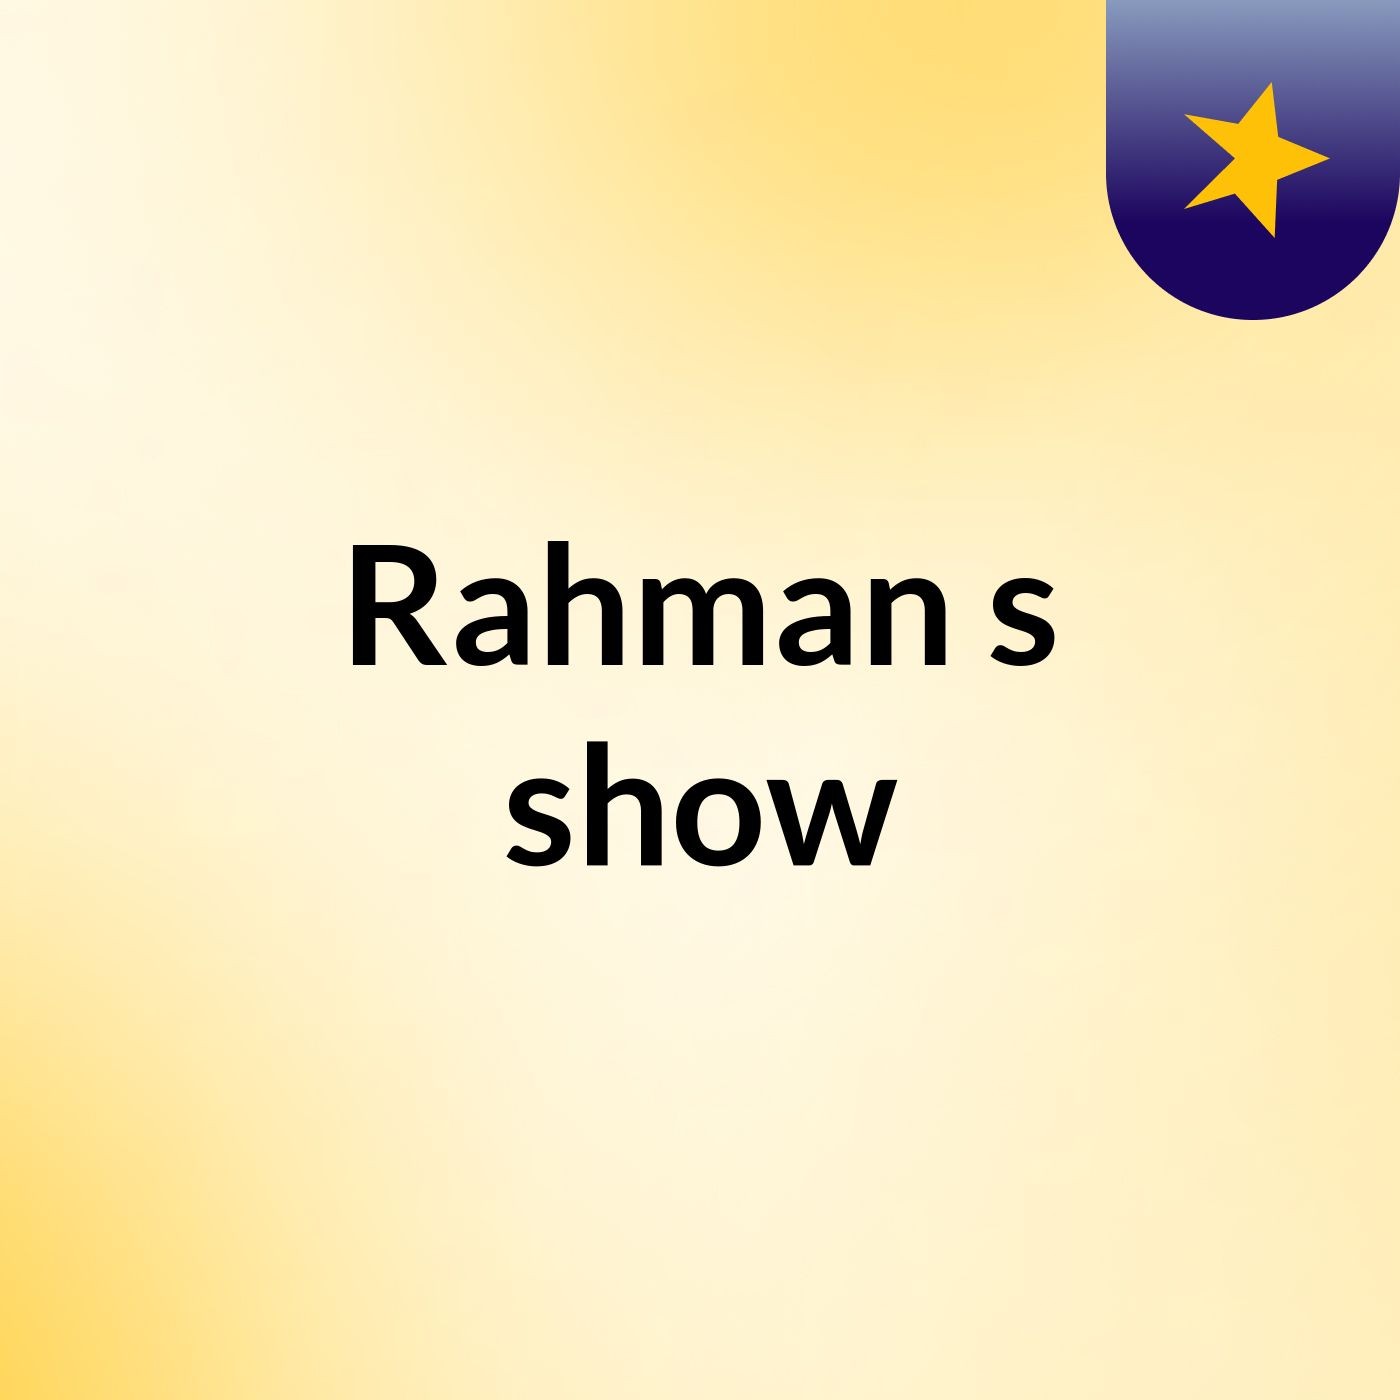 Rahman's show